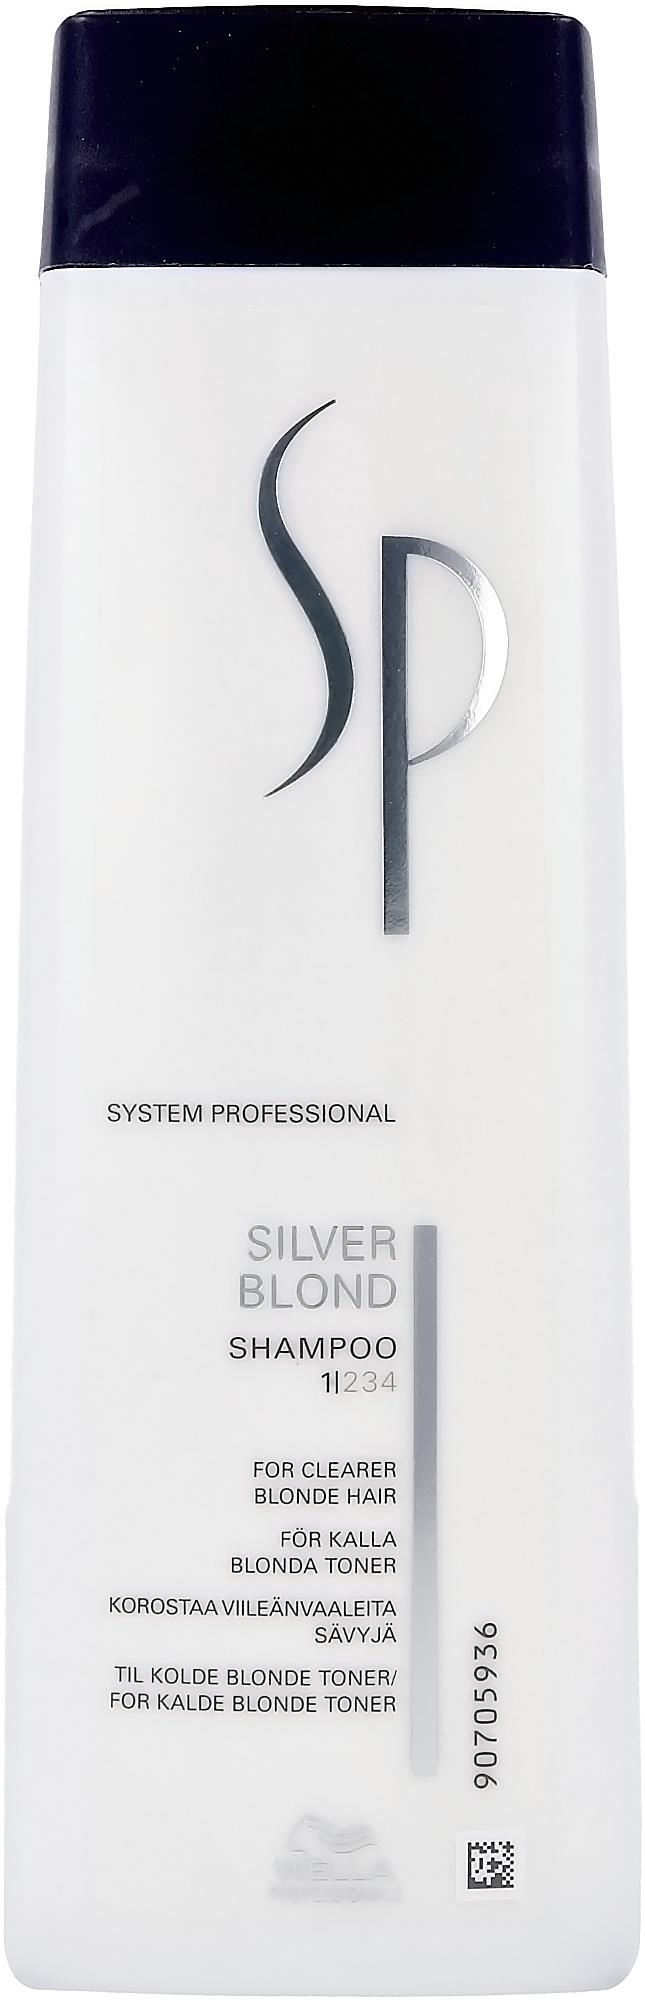 Folde margen Drikke sig fuld Wella Professionals SP Wella Silver Blond Shampoo 250 ml | lyko.com